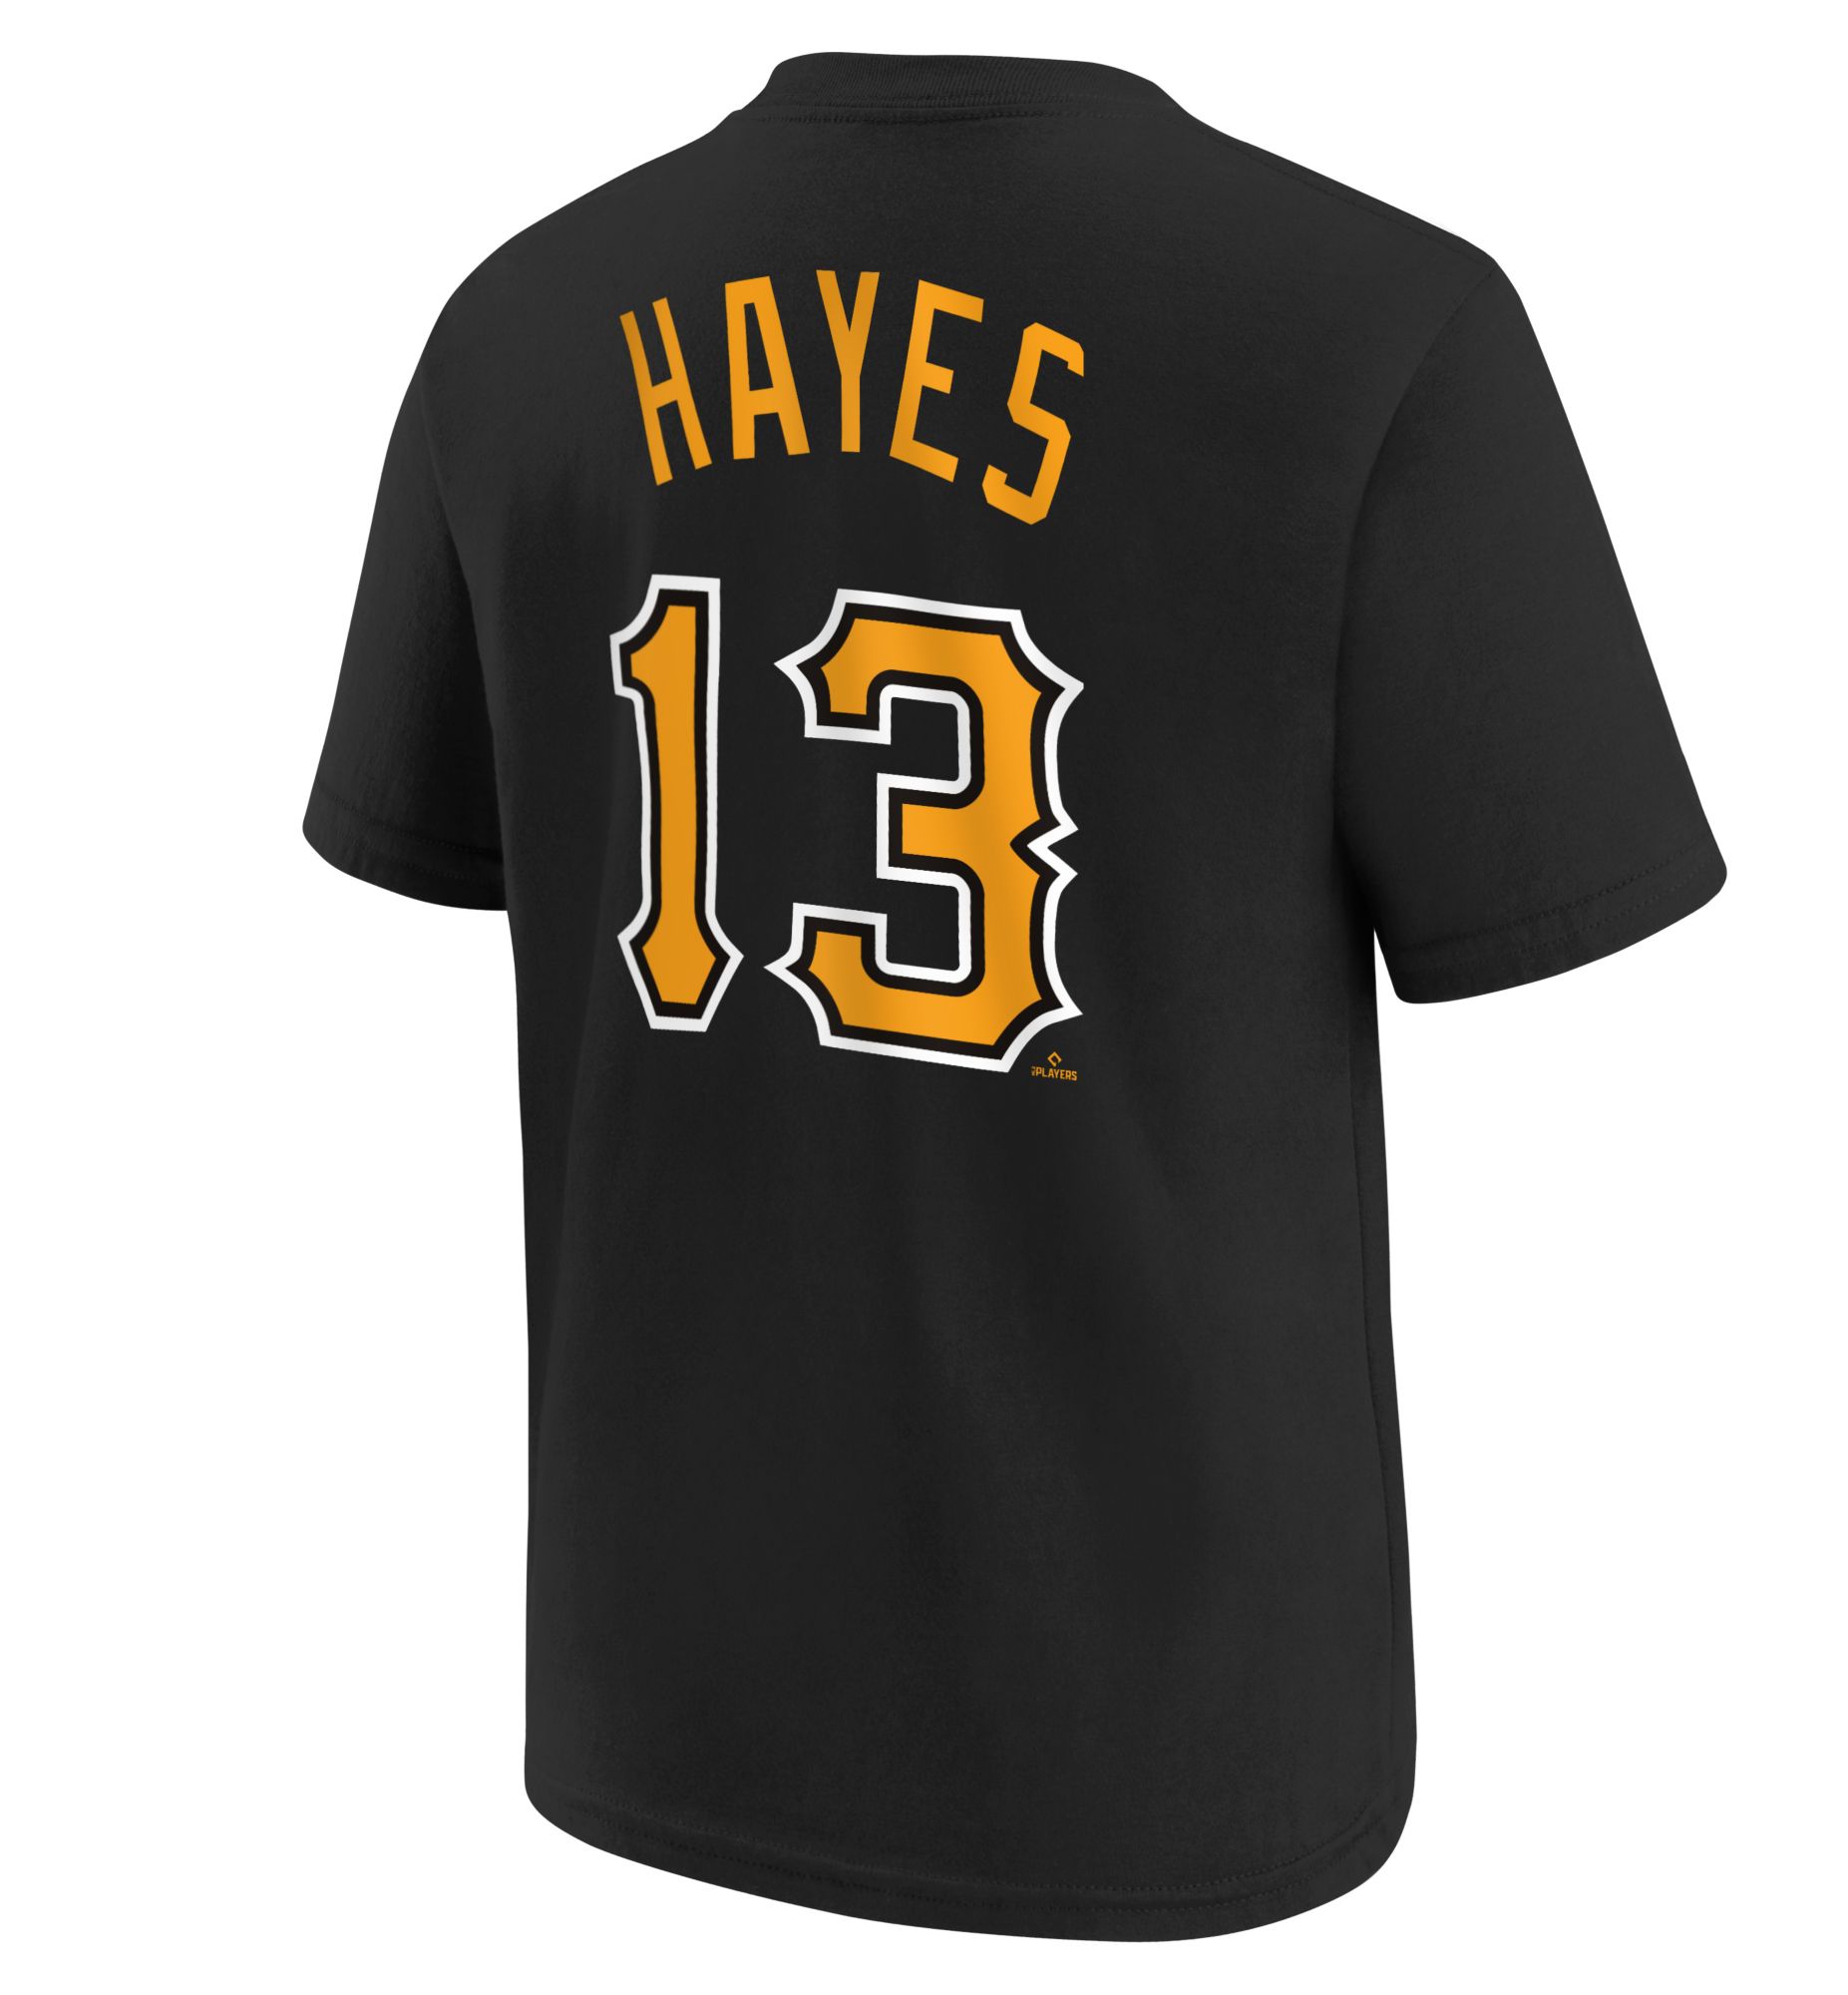 Nike / Youth Pittsburgh Pirates Ke'Bryan Hayes #13 Yellow T-Shirt